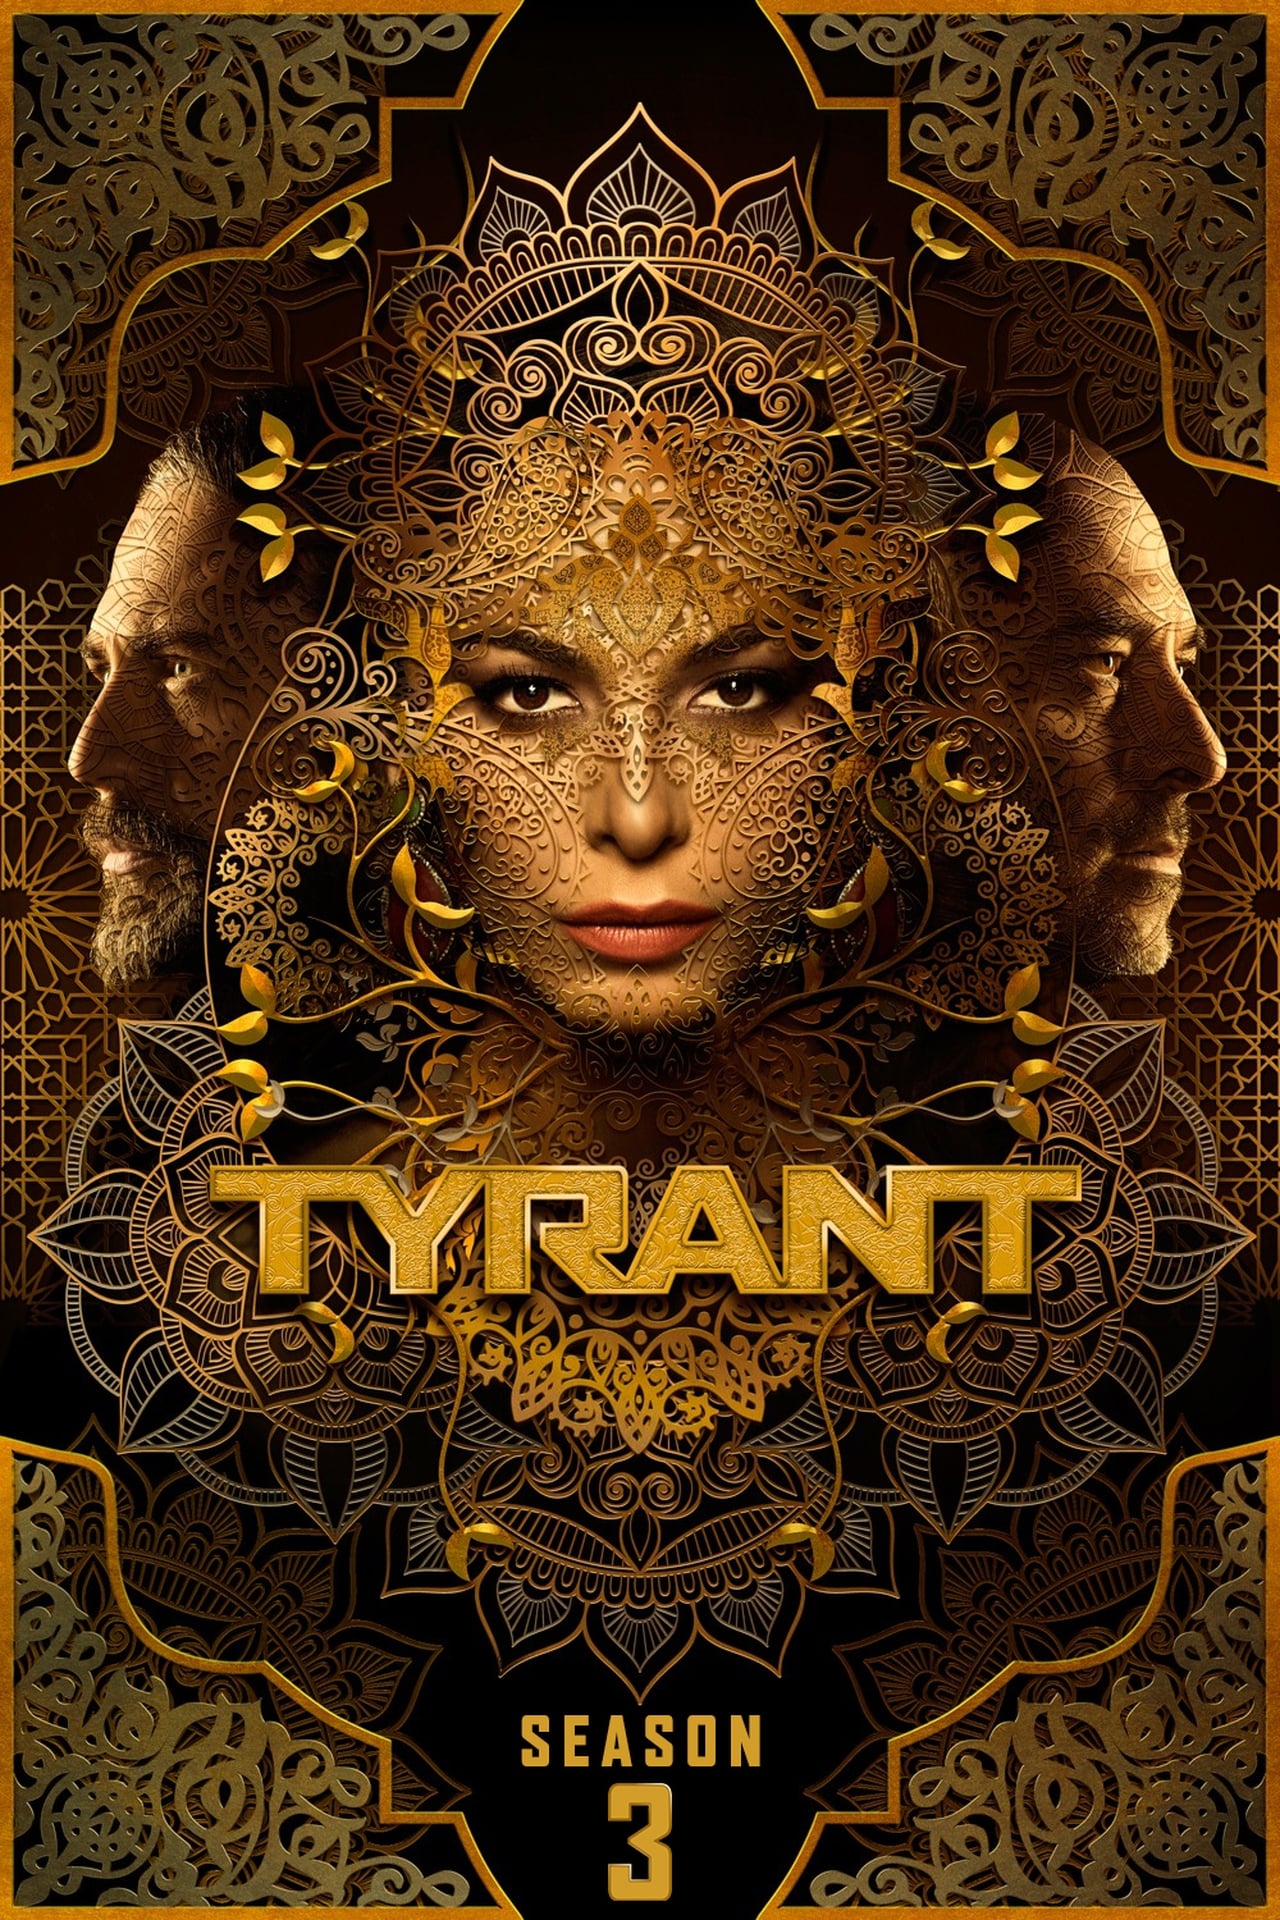 Tyrant Season 3